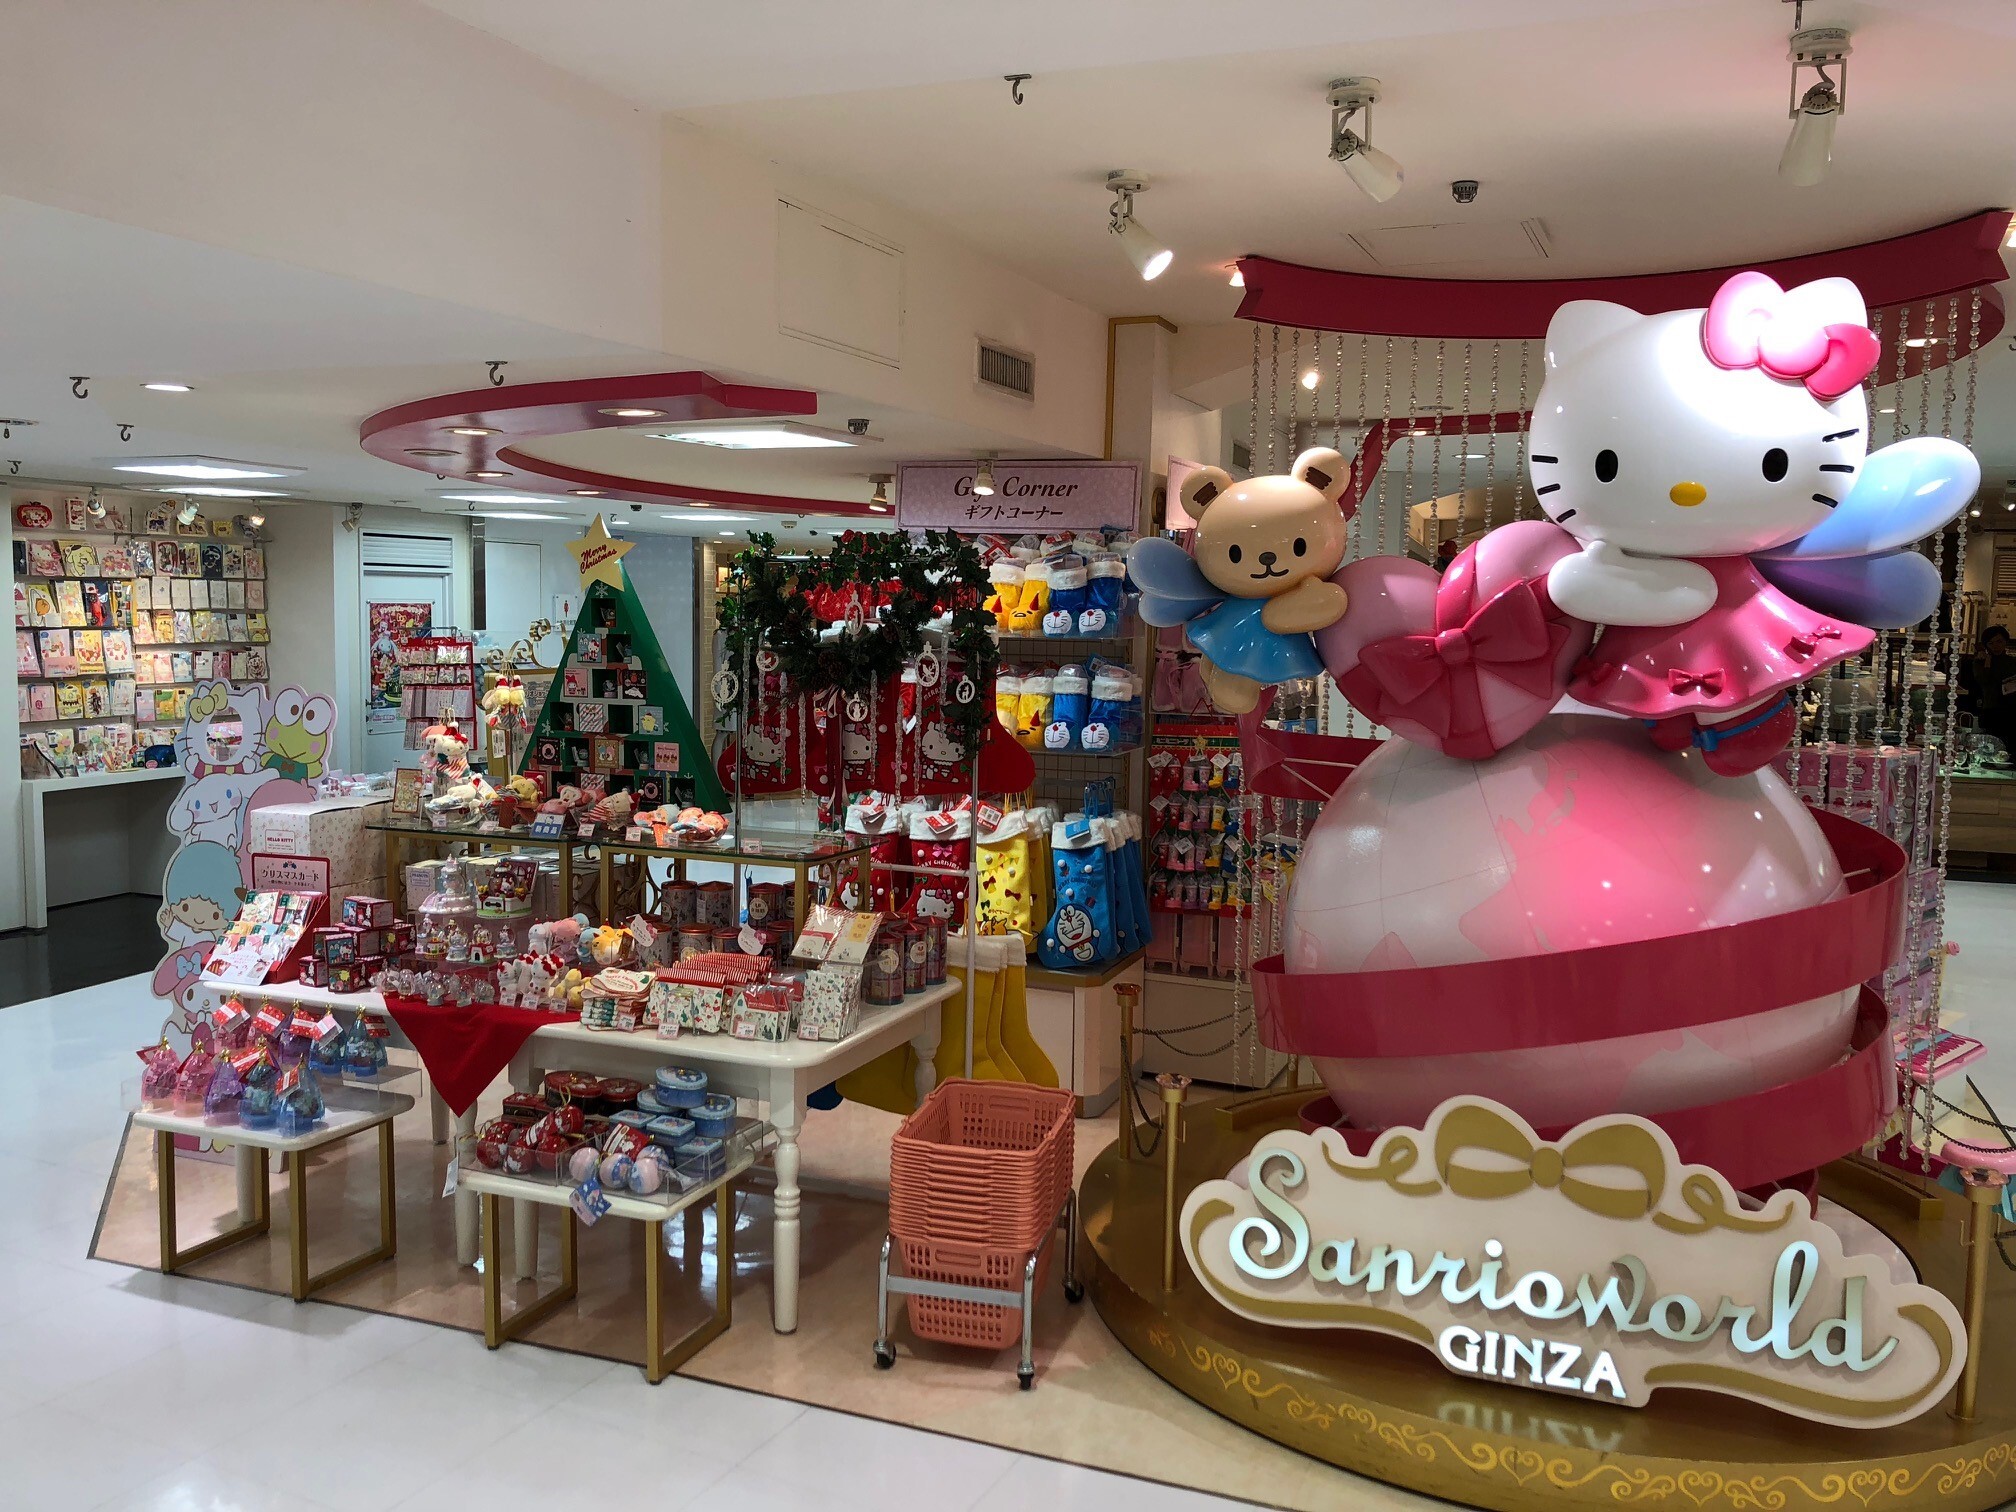 Sanrioworld Ginza Japan Shopping Now